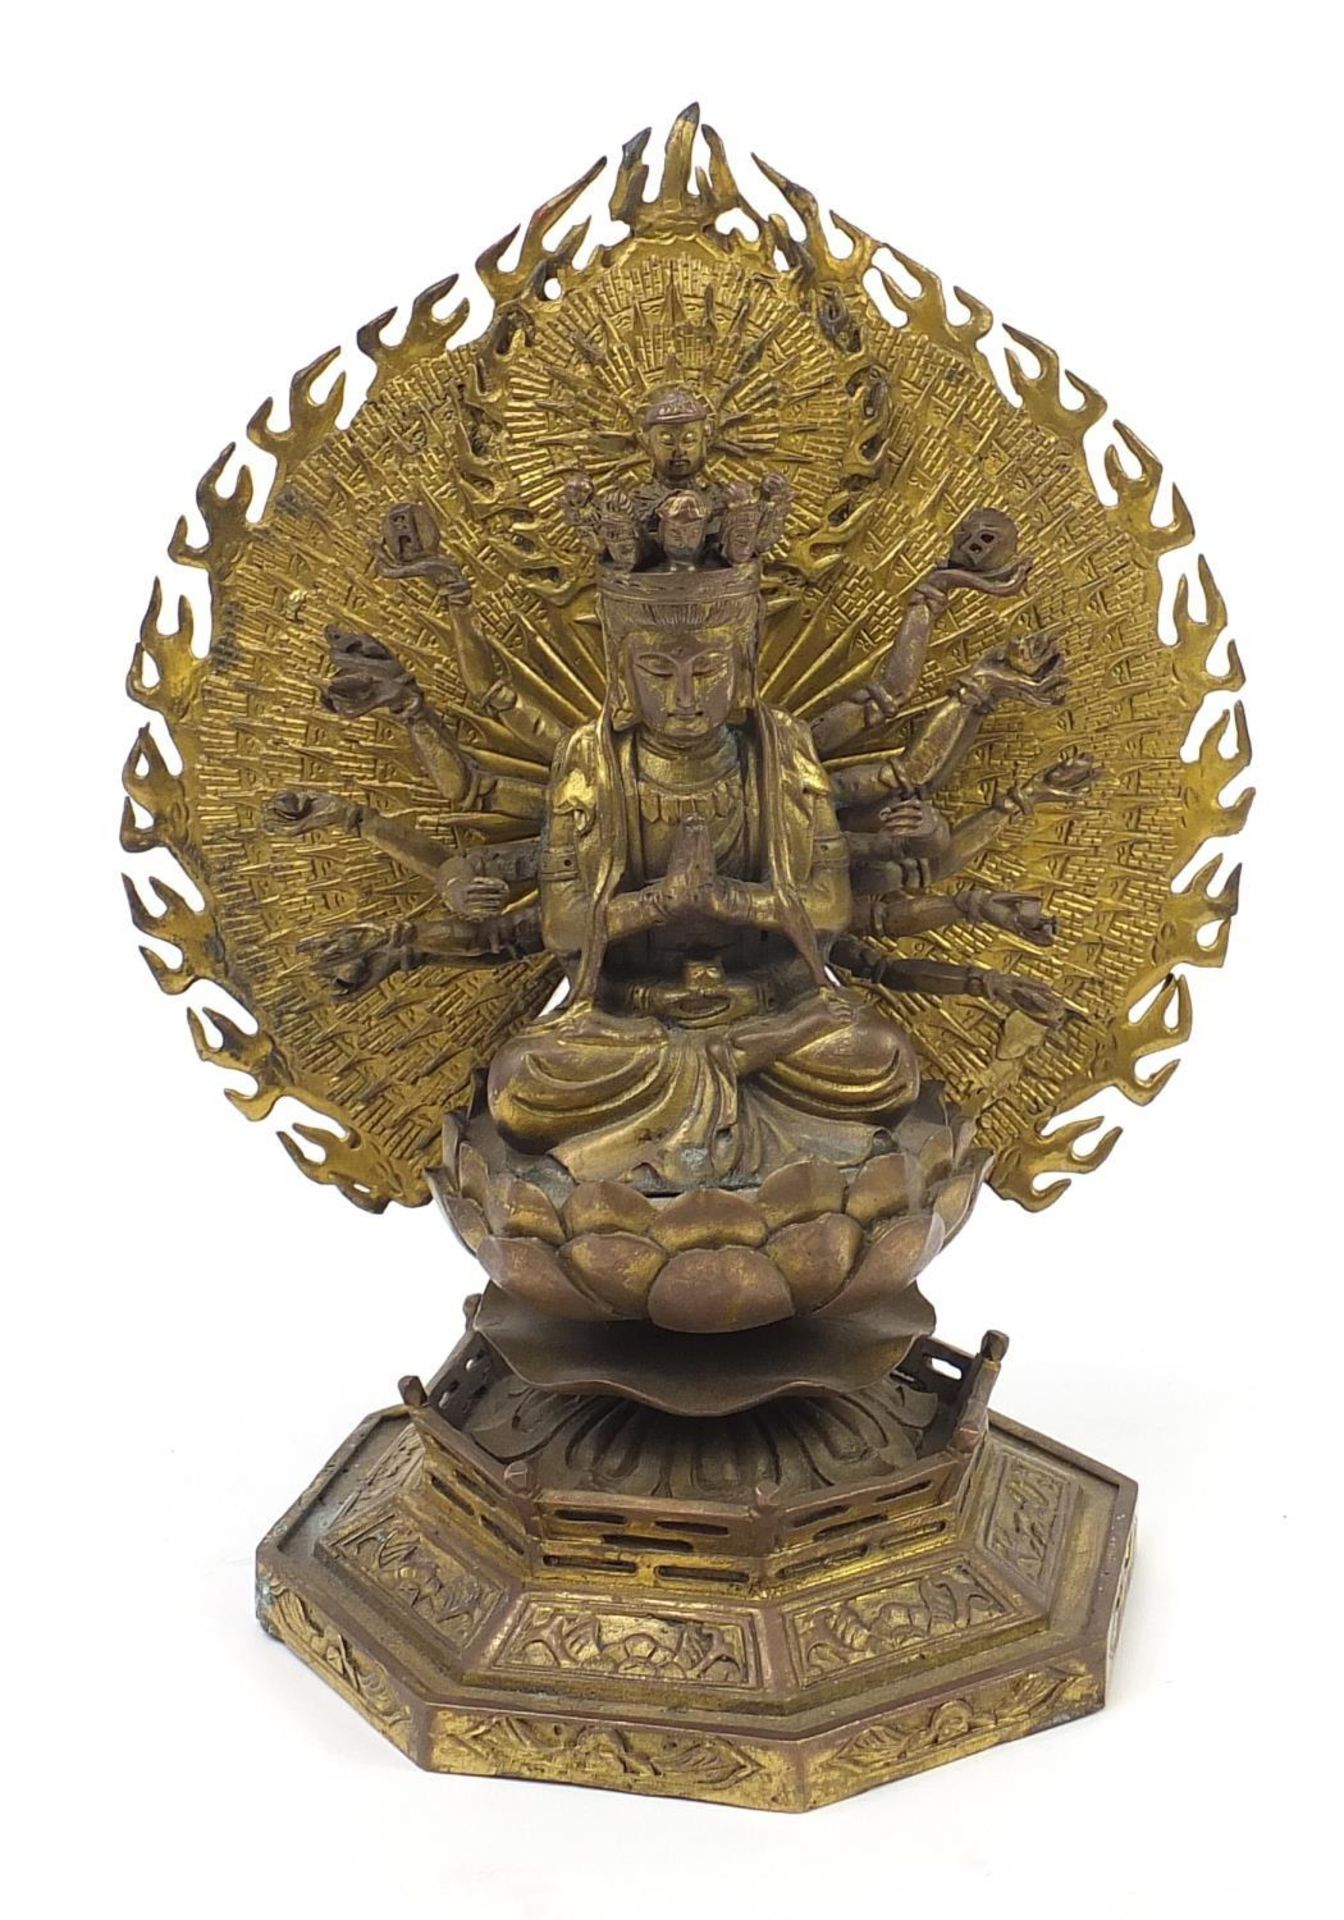 Tibetan gilt bronze figure of Buddha with lotus flower, 29.5cm high